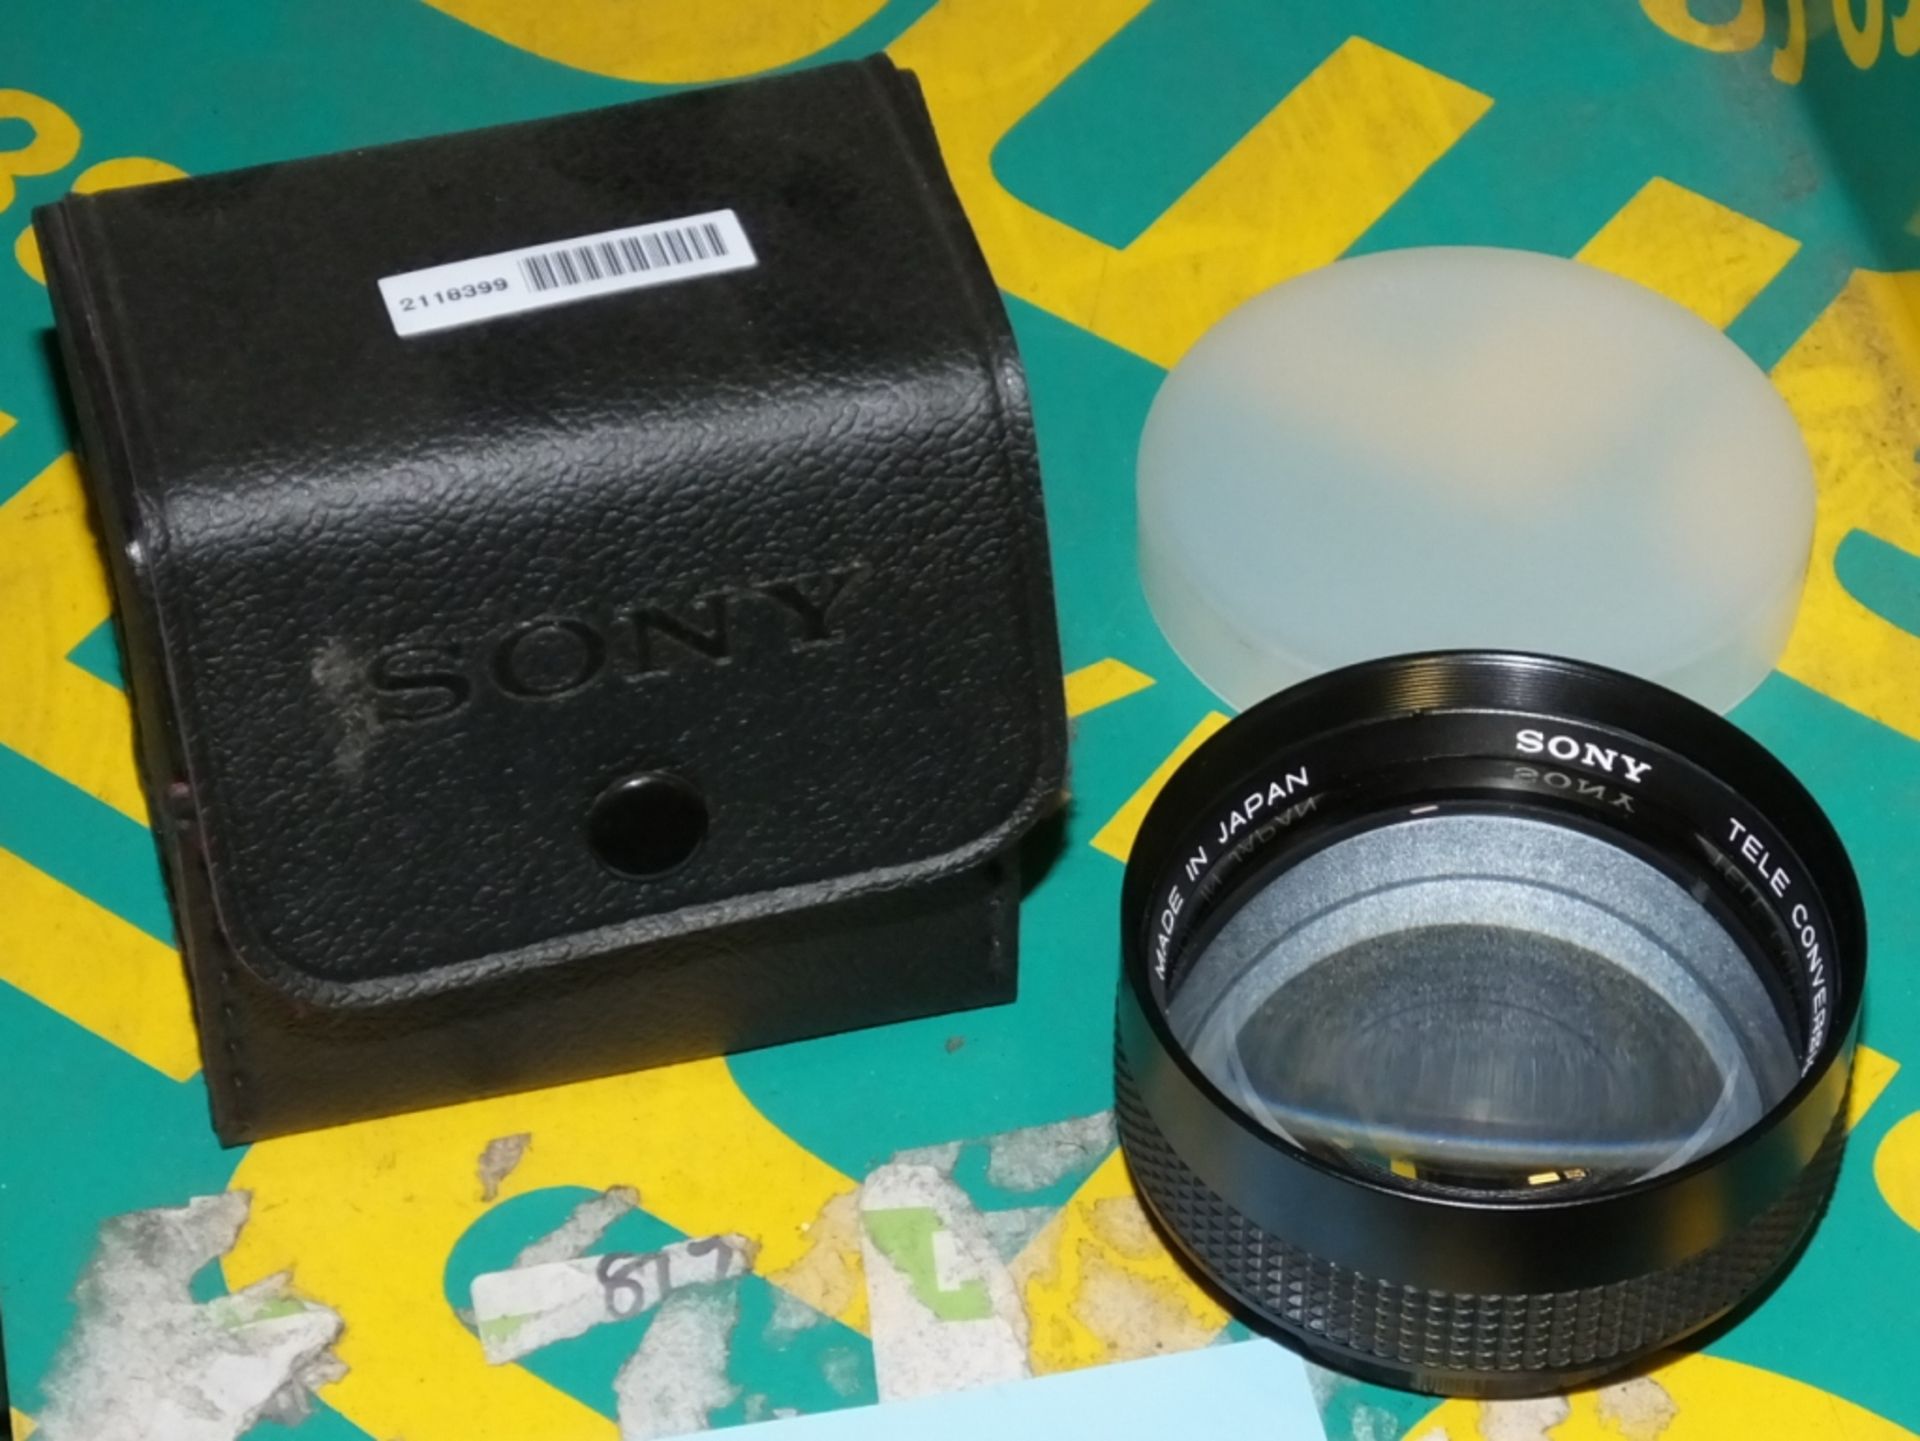 Sony Tele conversion Lens X1.5 - VCL-1558 A